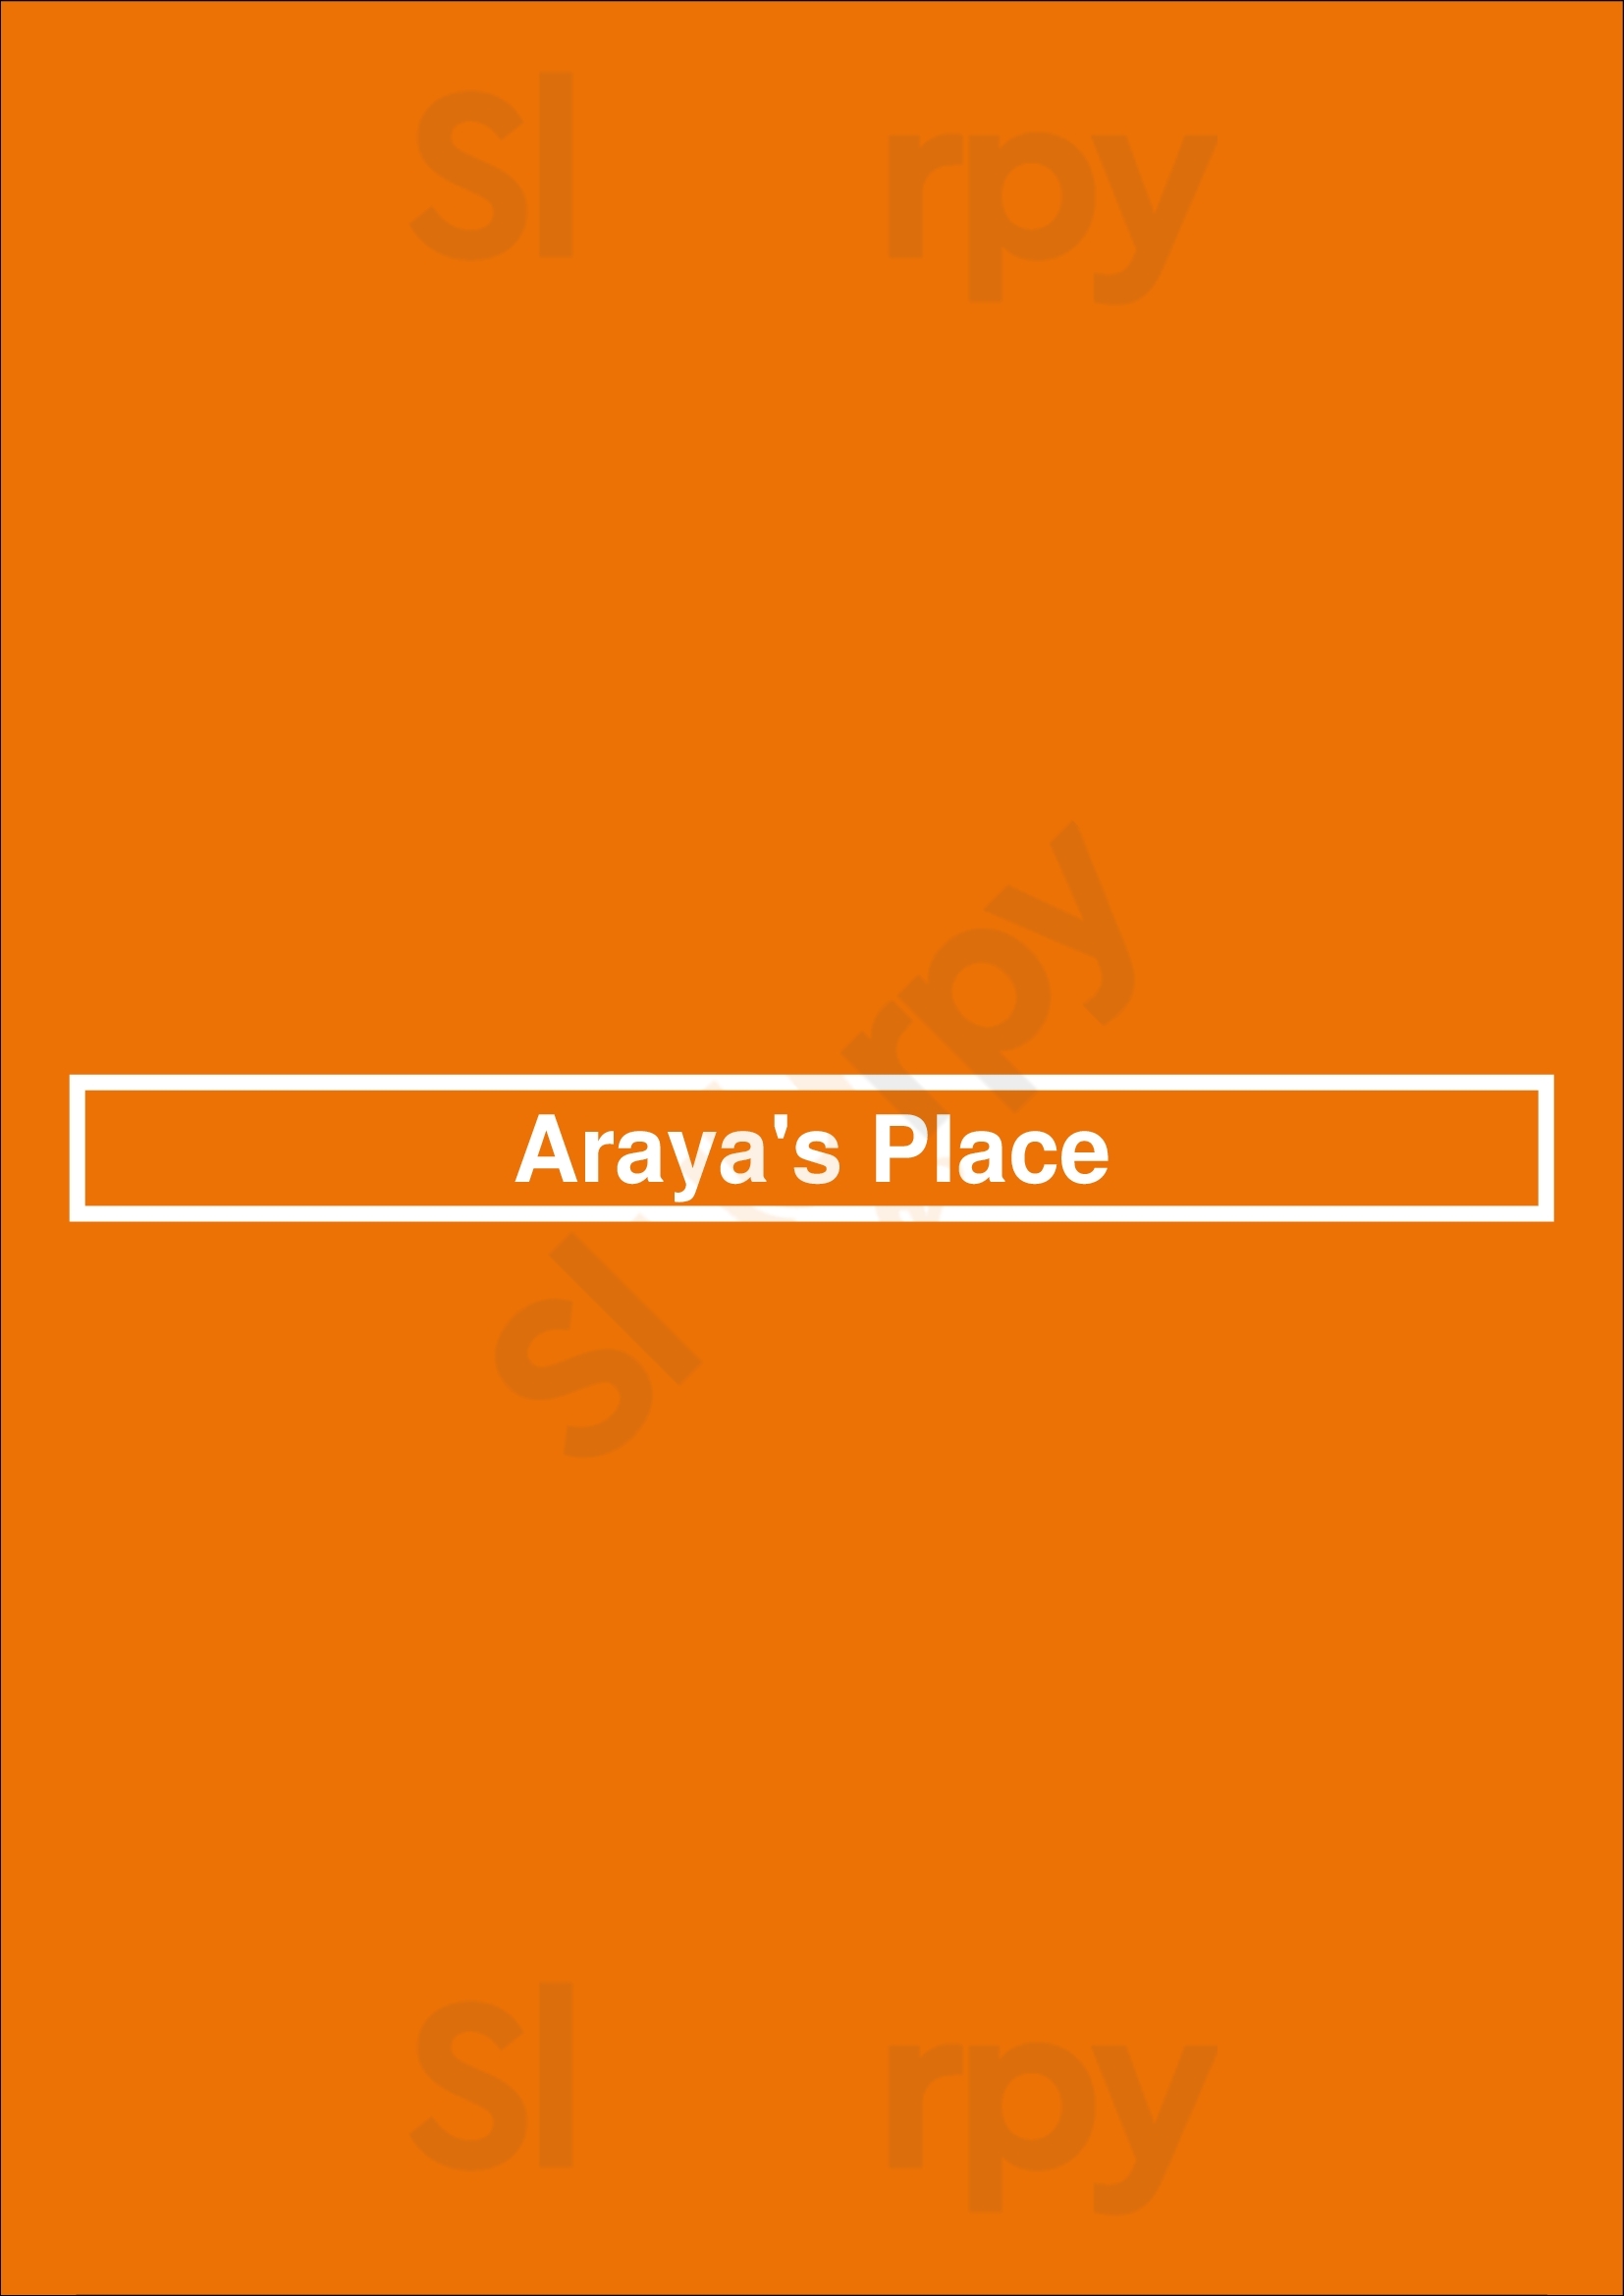 Araya's Place Los Angeles Menu - 1